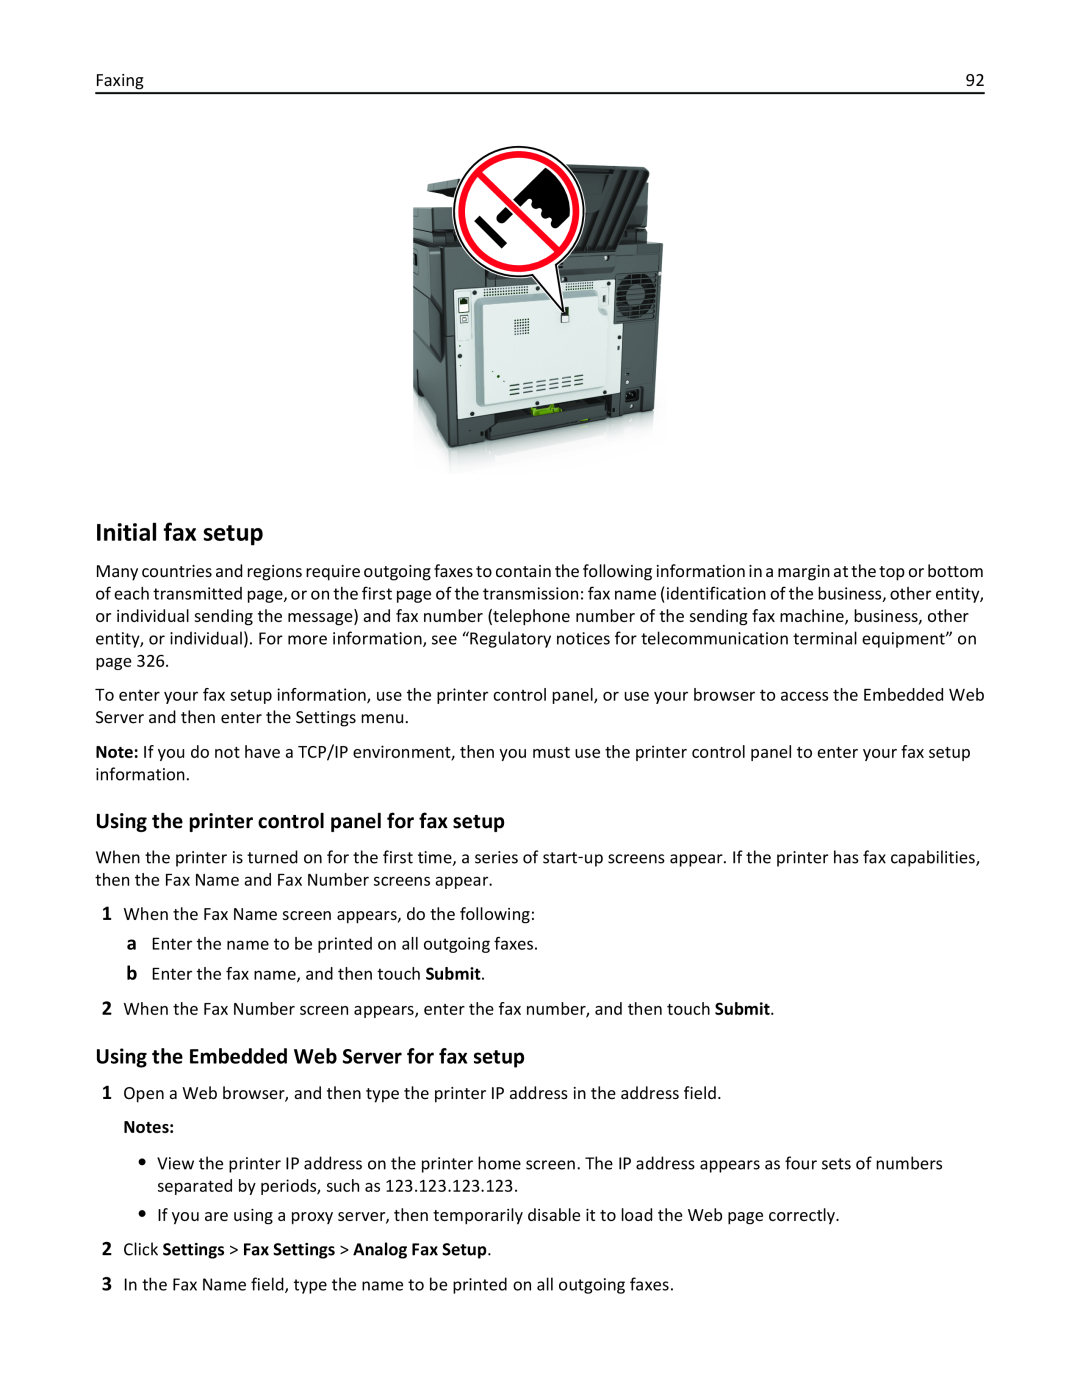 Lexmark 436 Initial fax setup, Using the printer control panel for fax setup, Using the Embedded Web Server for fax setup 